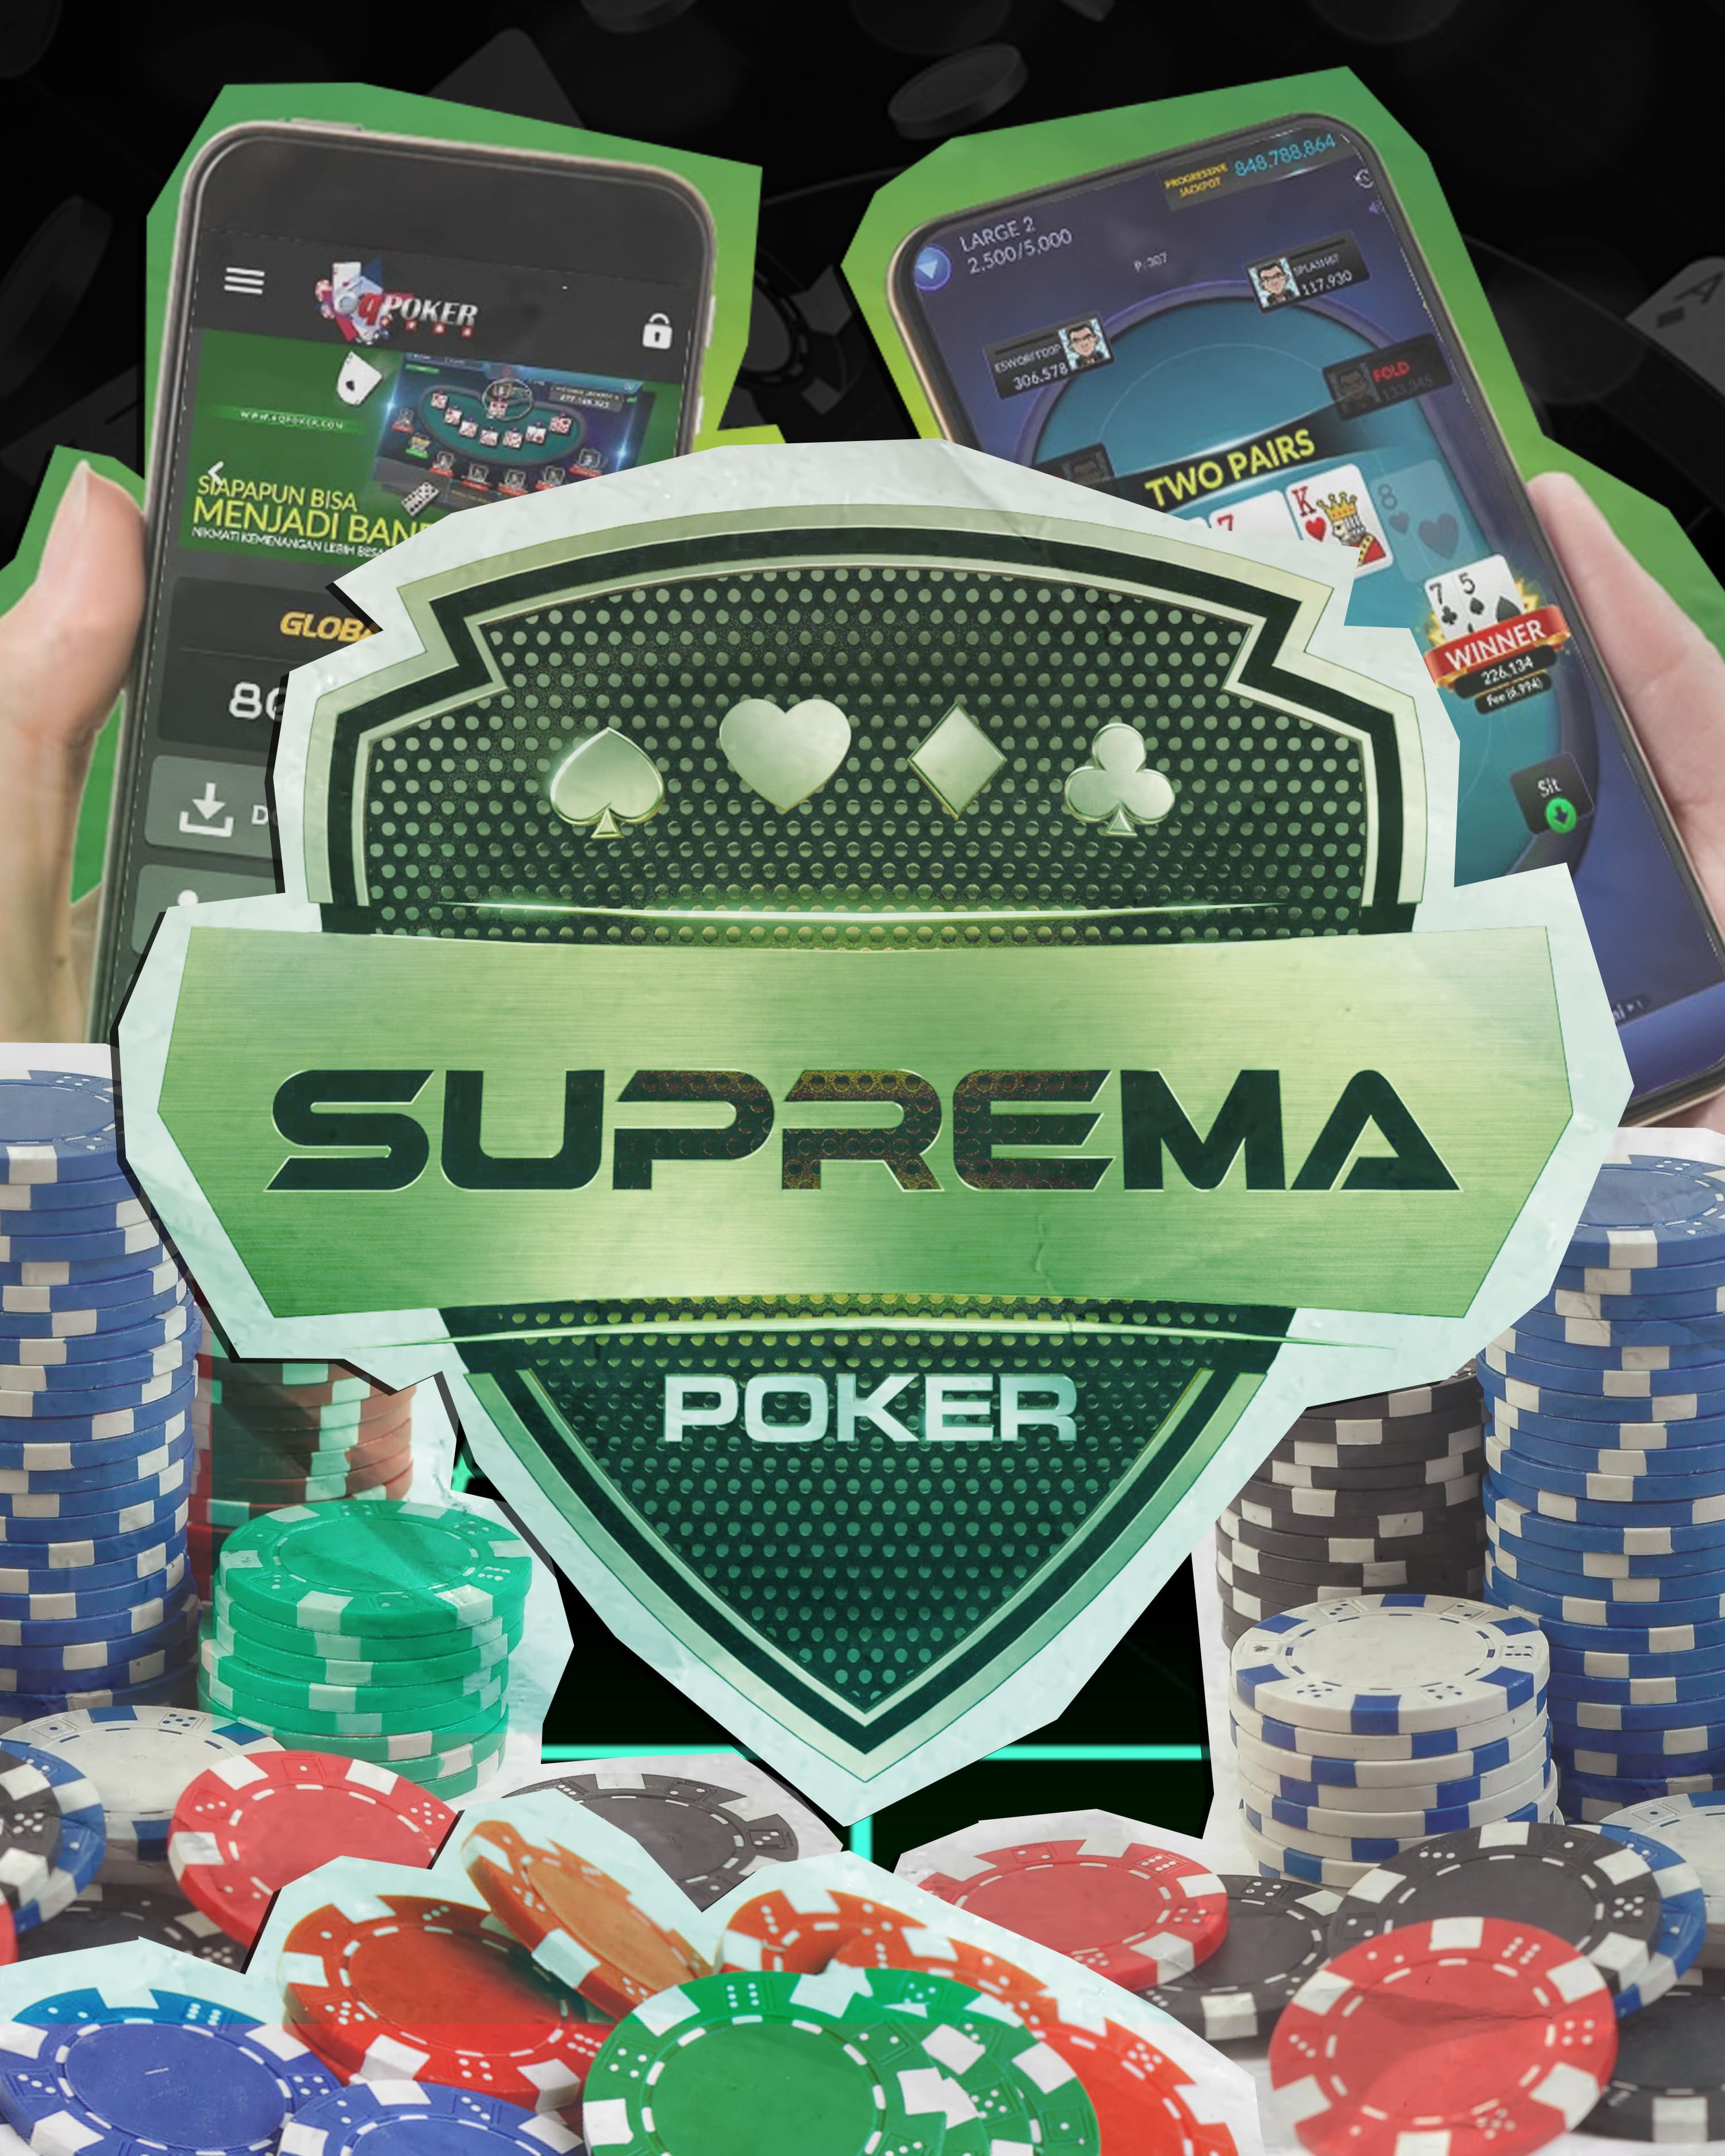 Suprema Poker is the evolution of online poker.